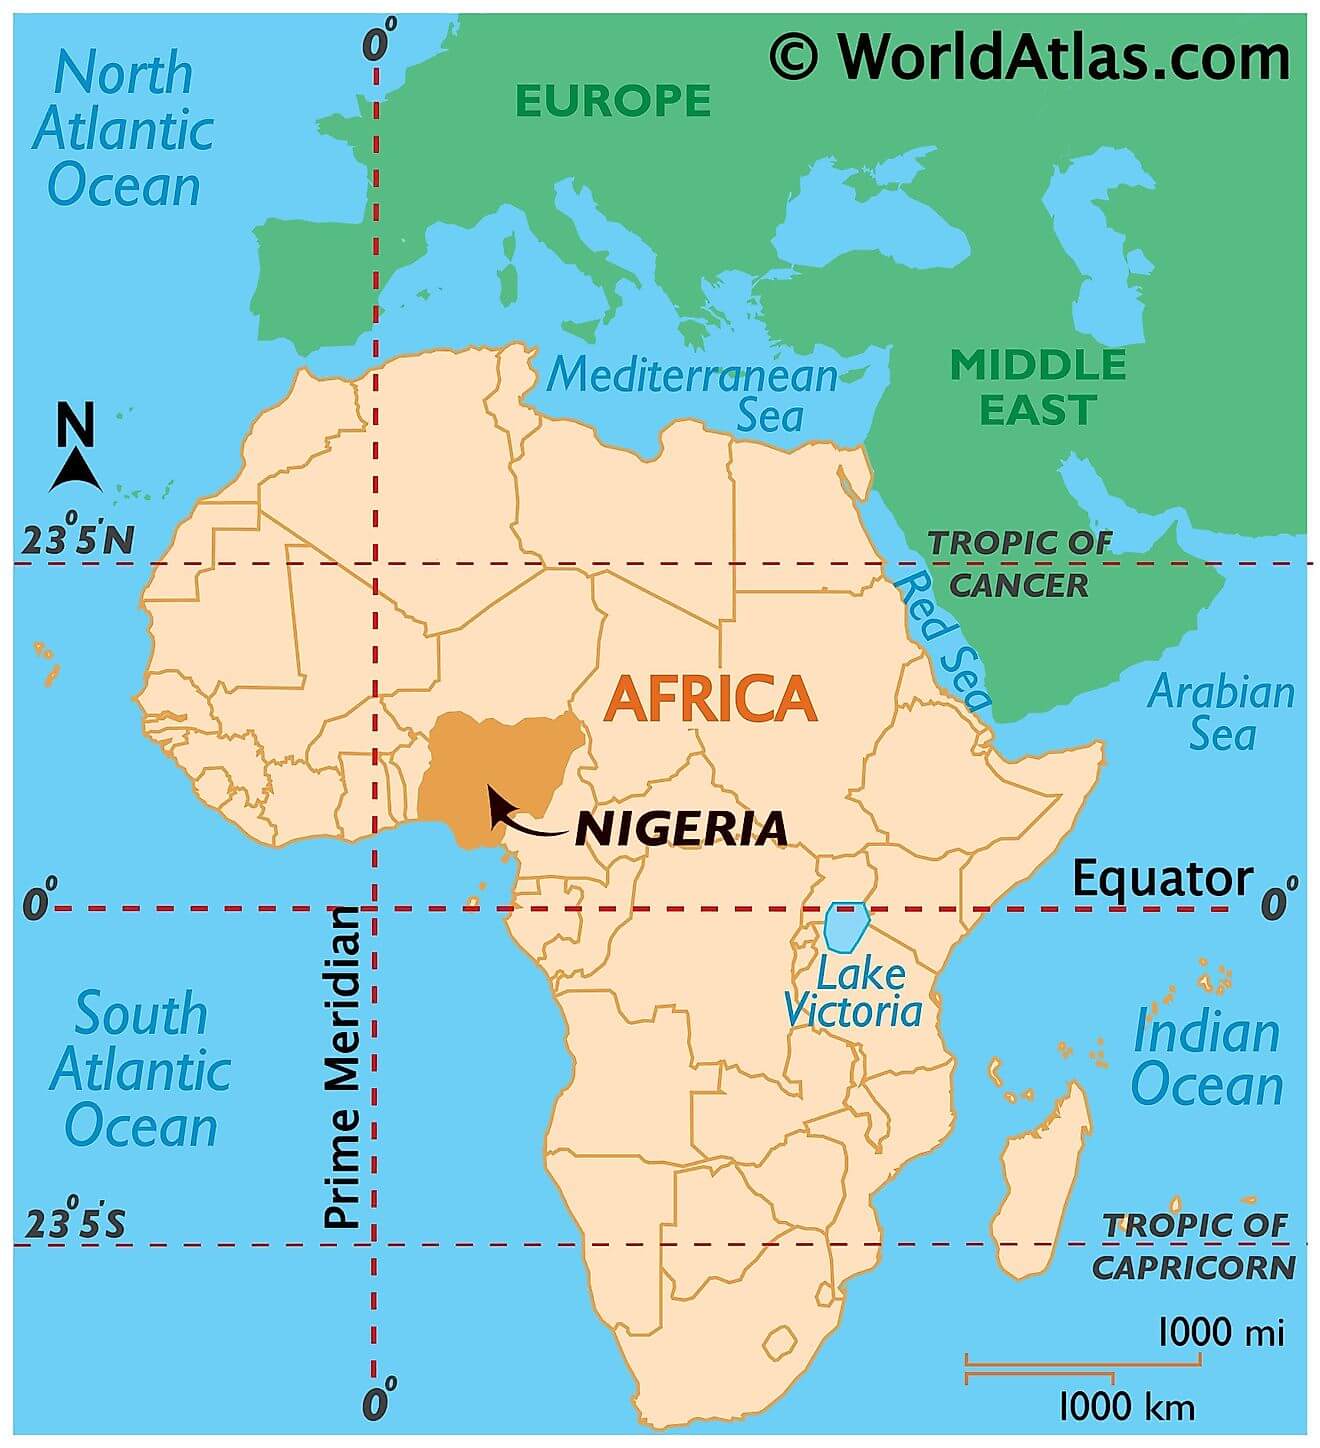 Where is Nigeria?